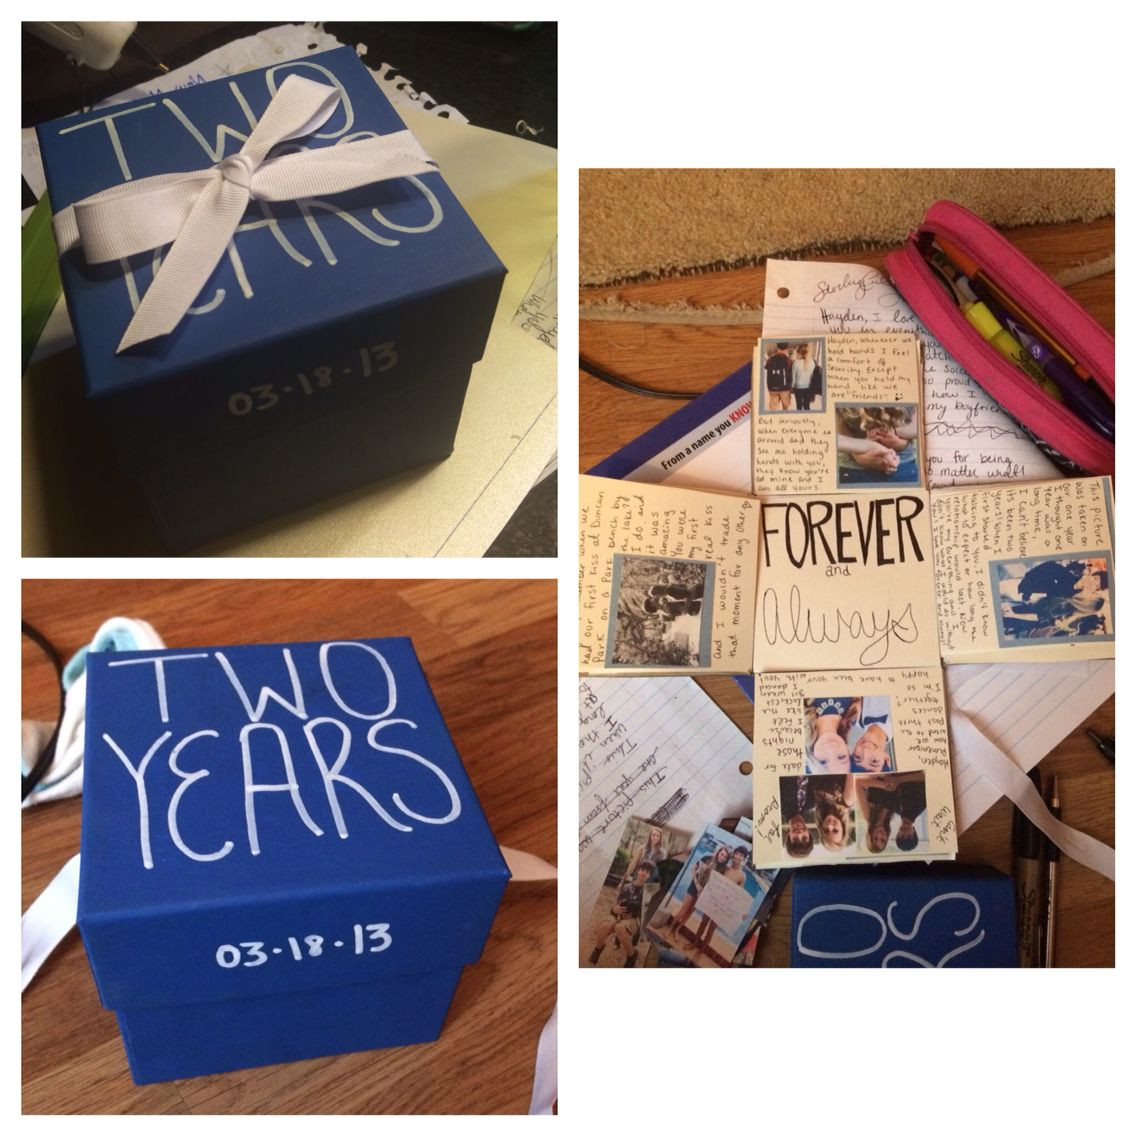 2 Yr Anniversary Gift Ideas
 Anniversary box For my boyfriend and I s 2 year I made